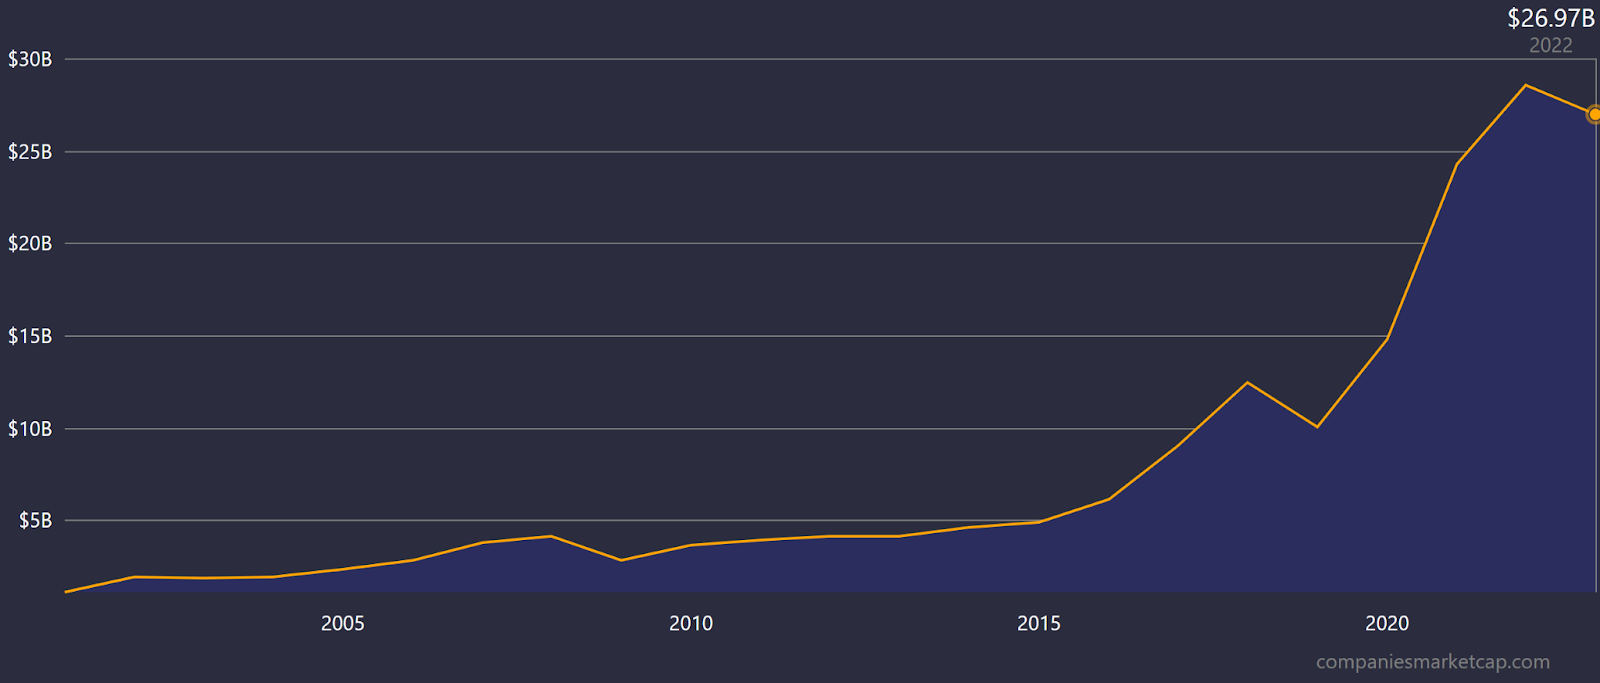 Graph of Nvidia Revenues | companiesmarketcap.com